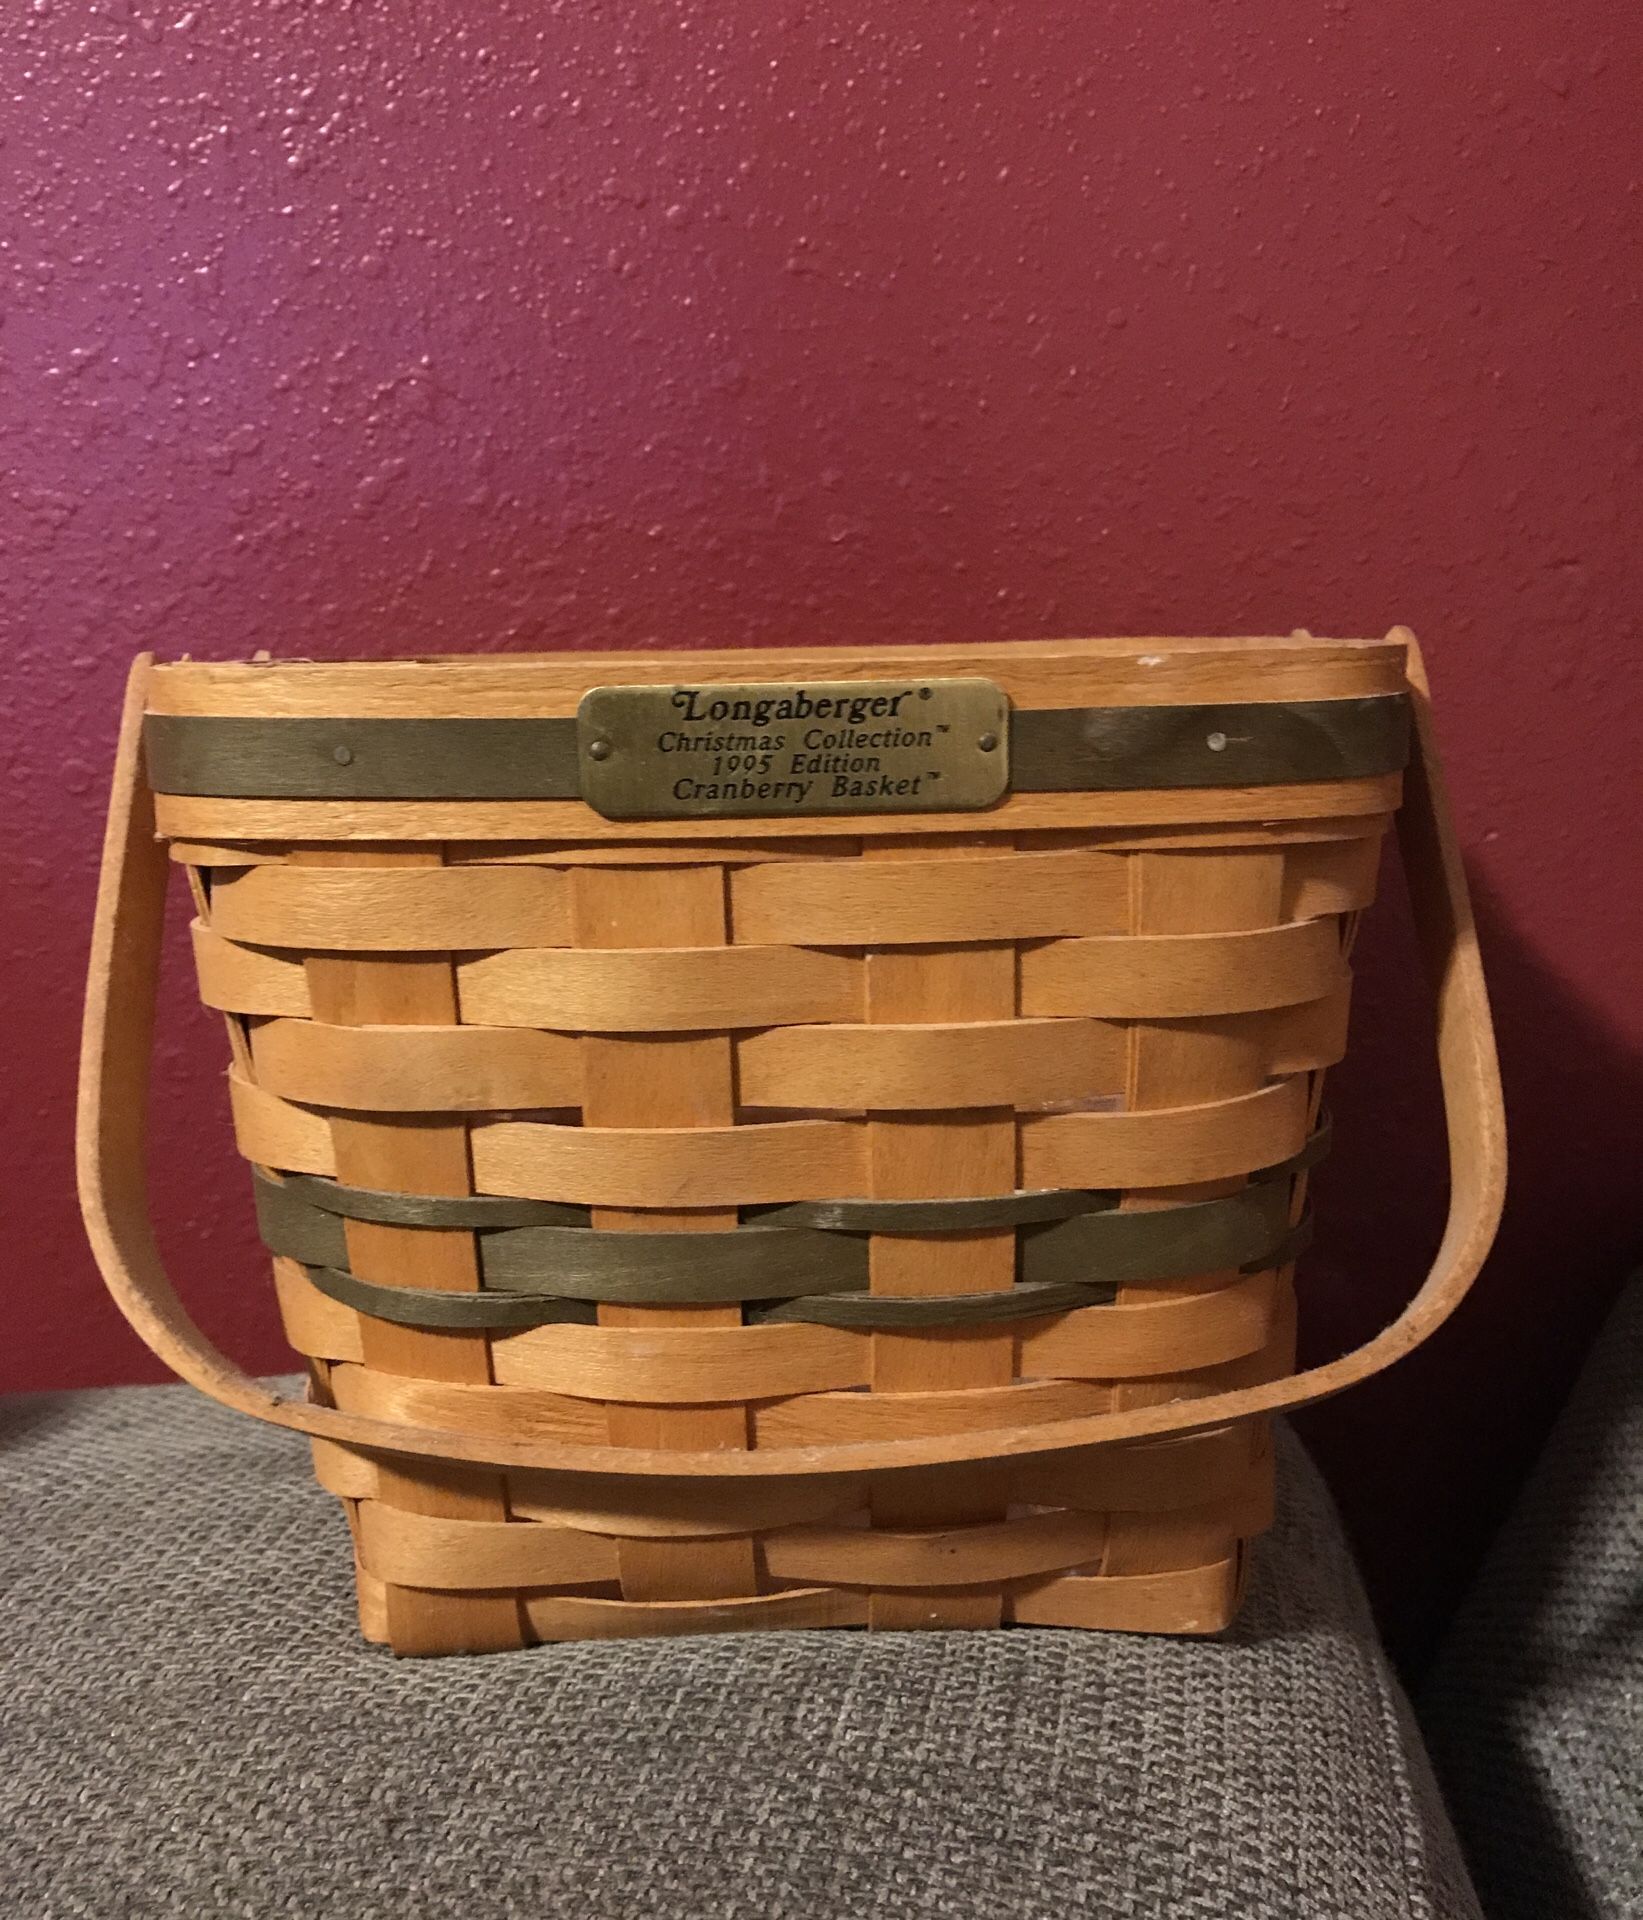 Longaberger Christmas Collection 1995 Edition Cranberry Basket